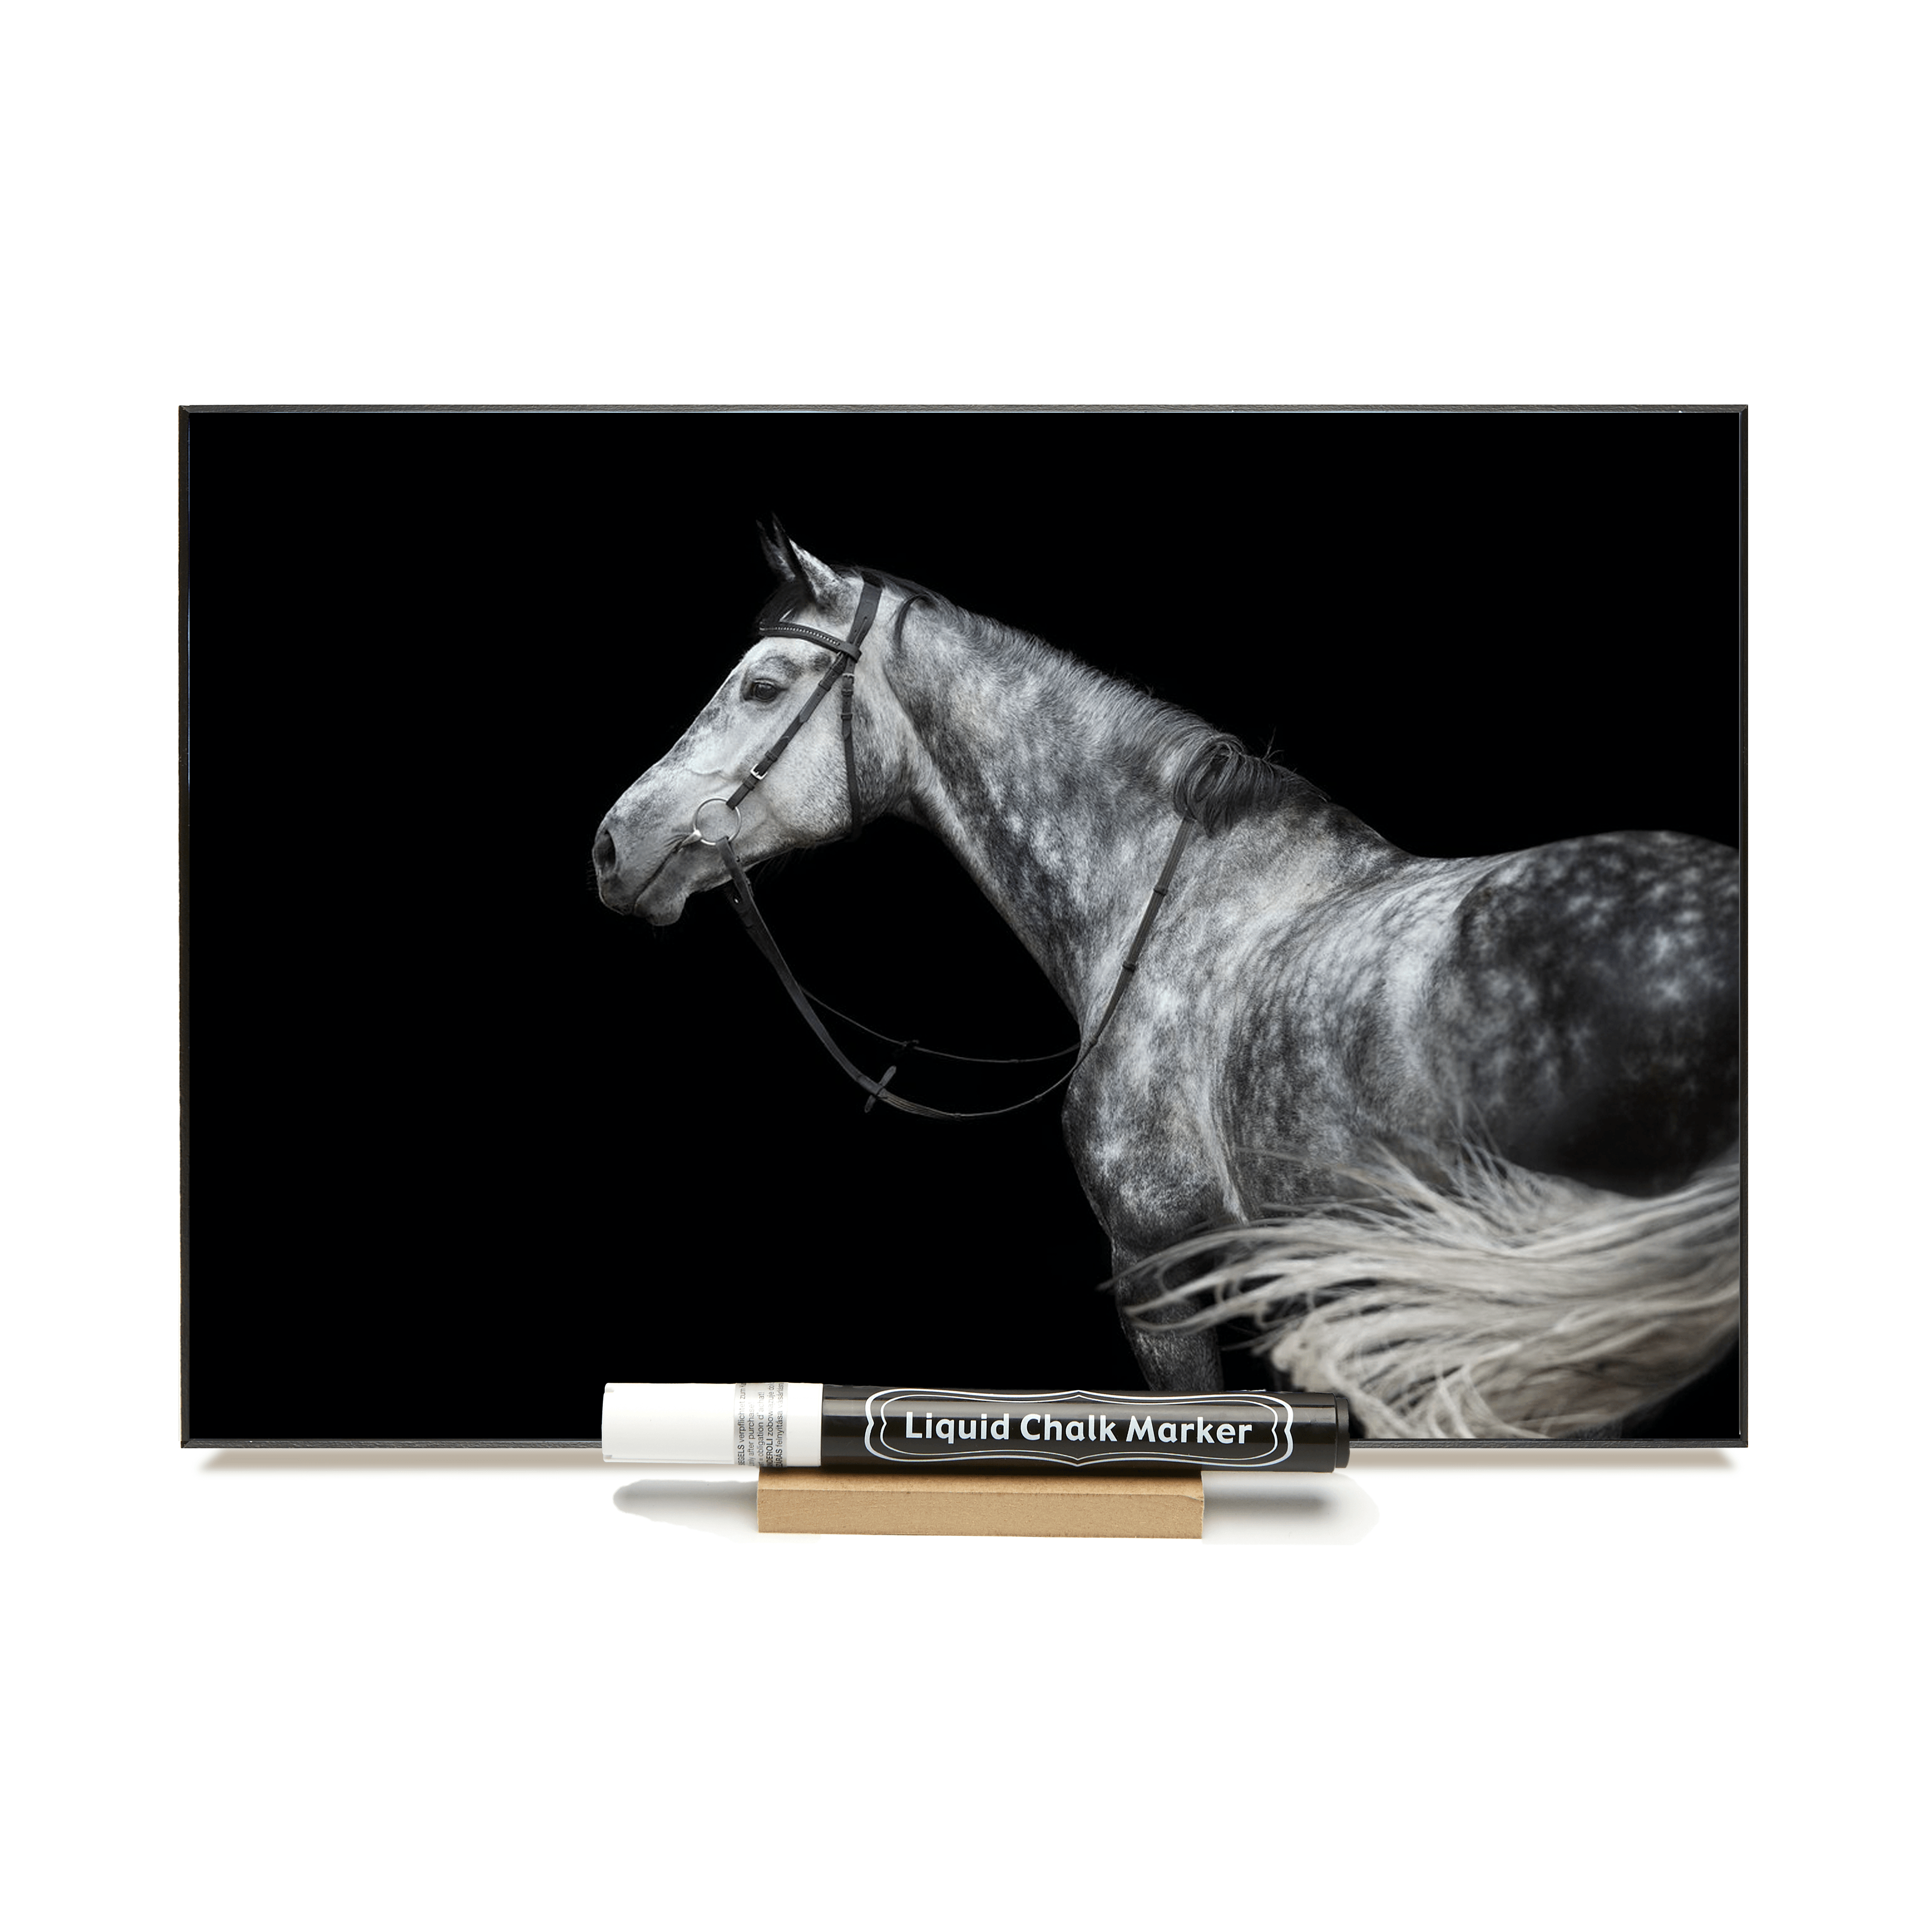 "Black & White Horse"  PHOTO CHALKBOARD  Includes Chalkboard, Chalk Marker & Stand